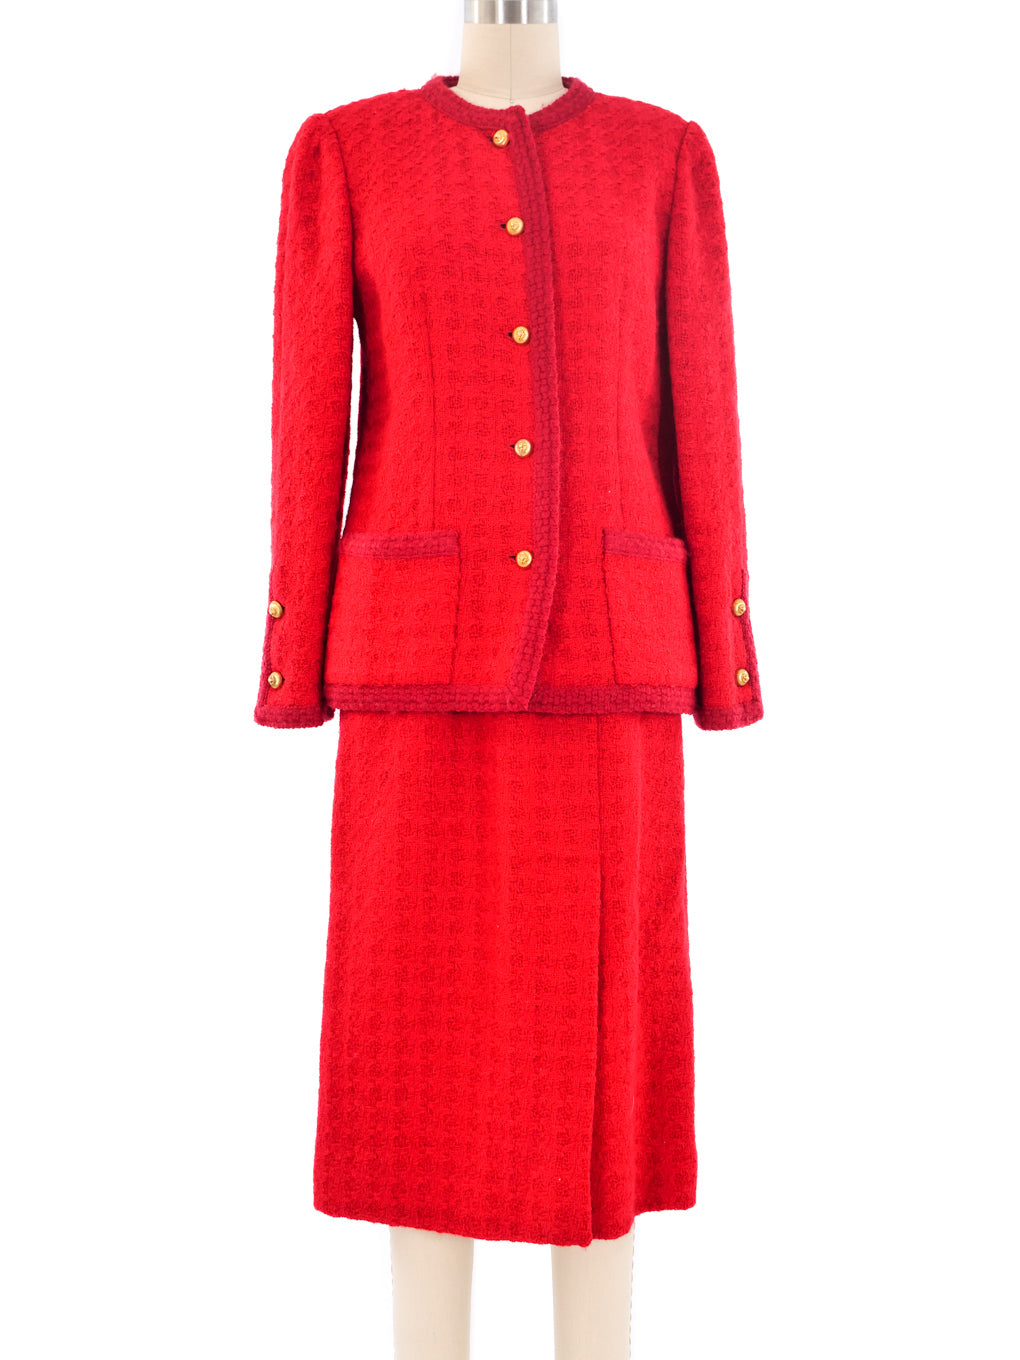 AV24 Chanel Red Tweed Suit